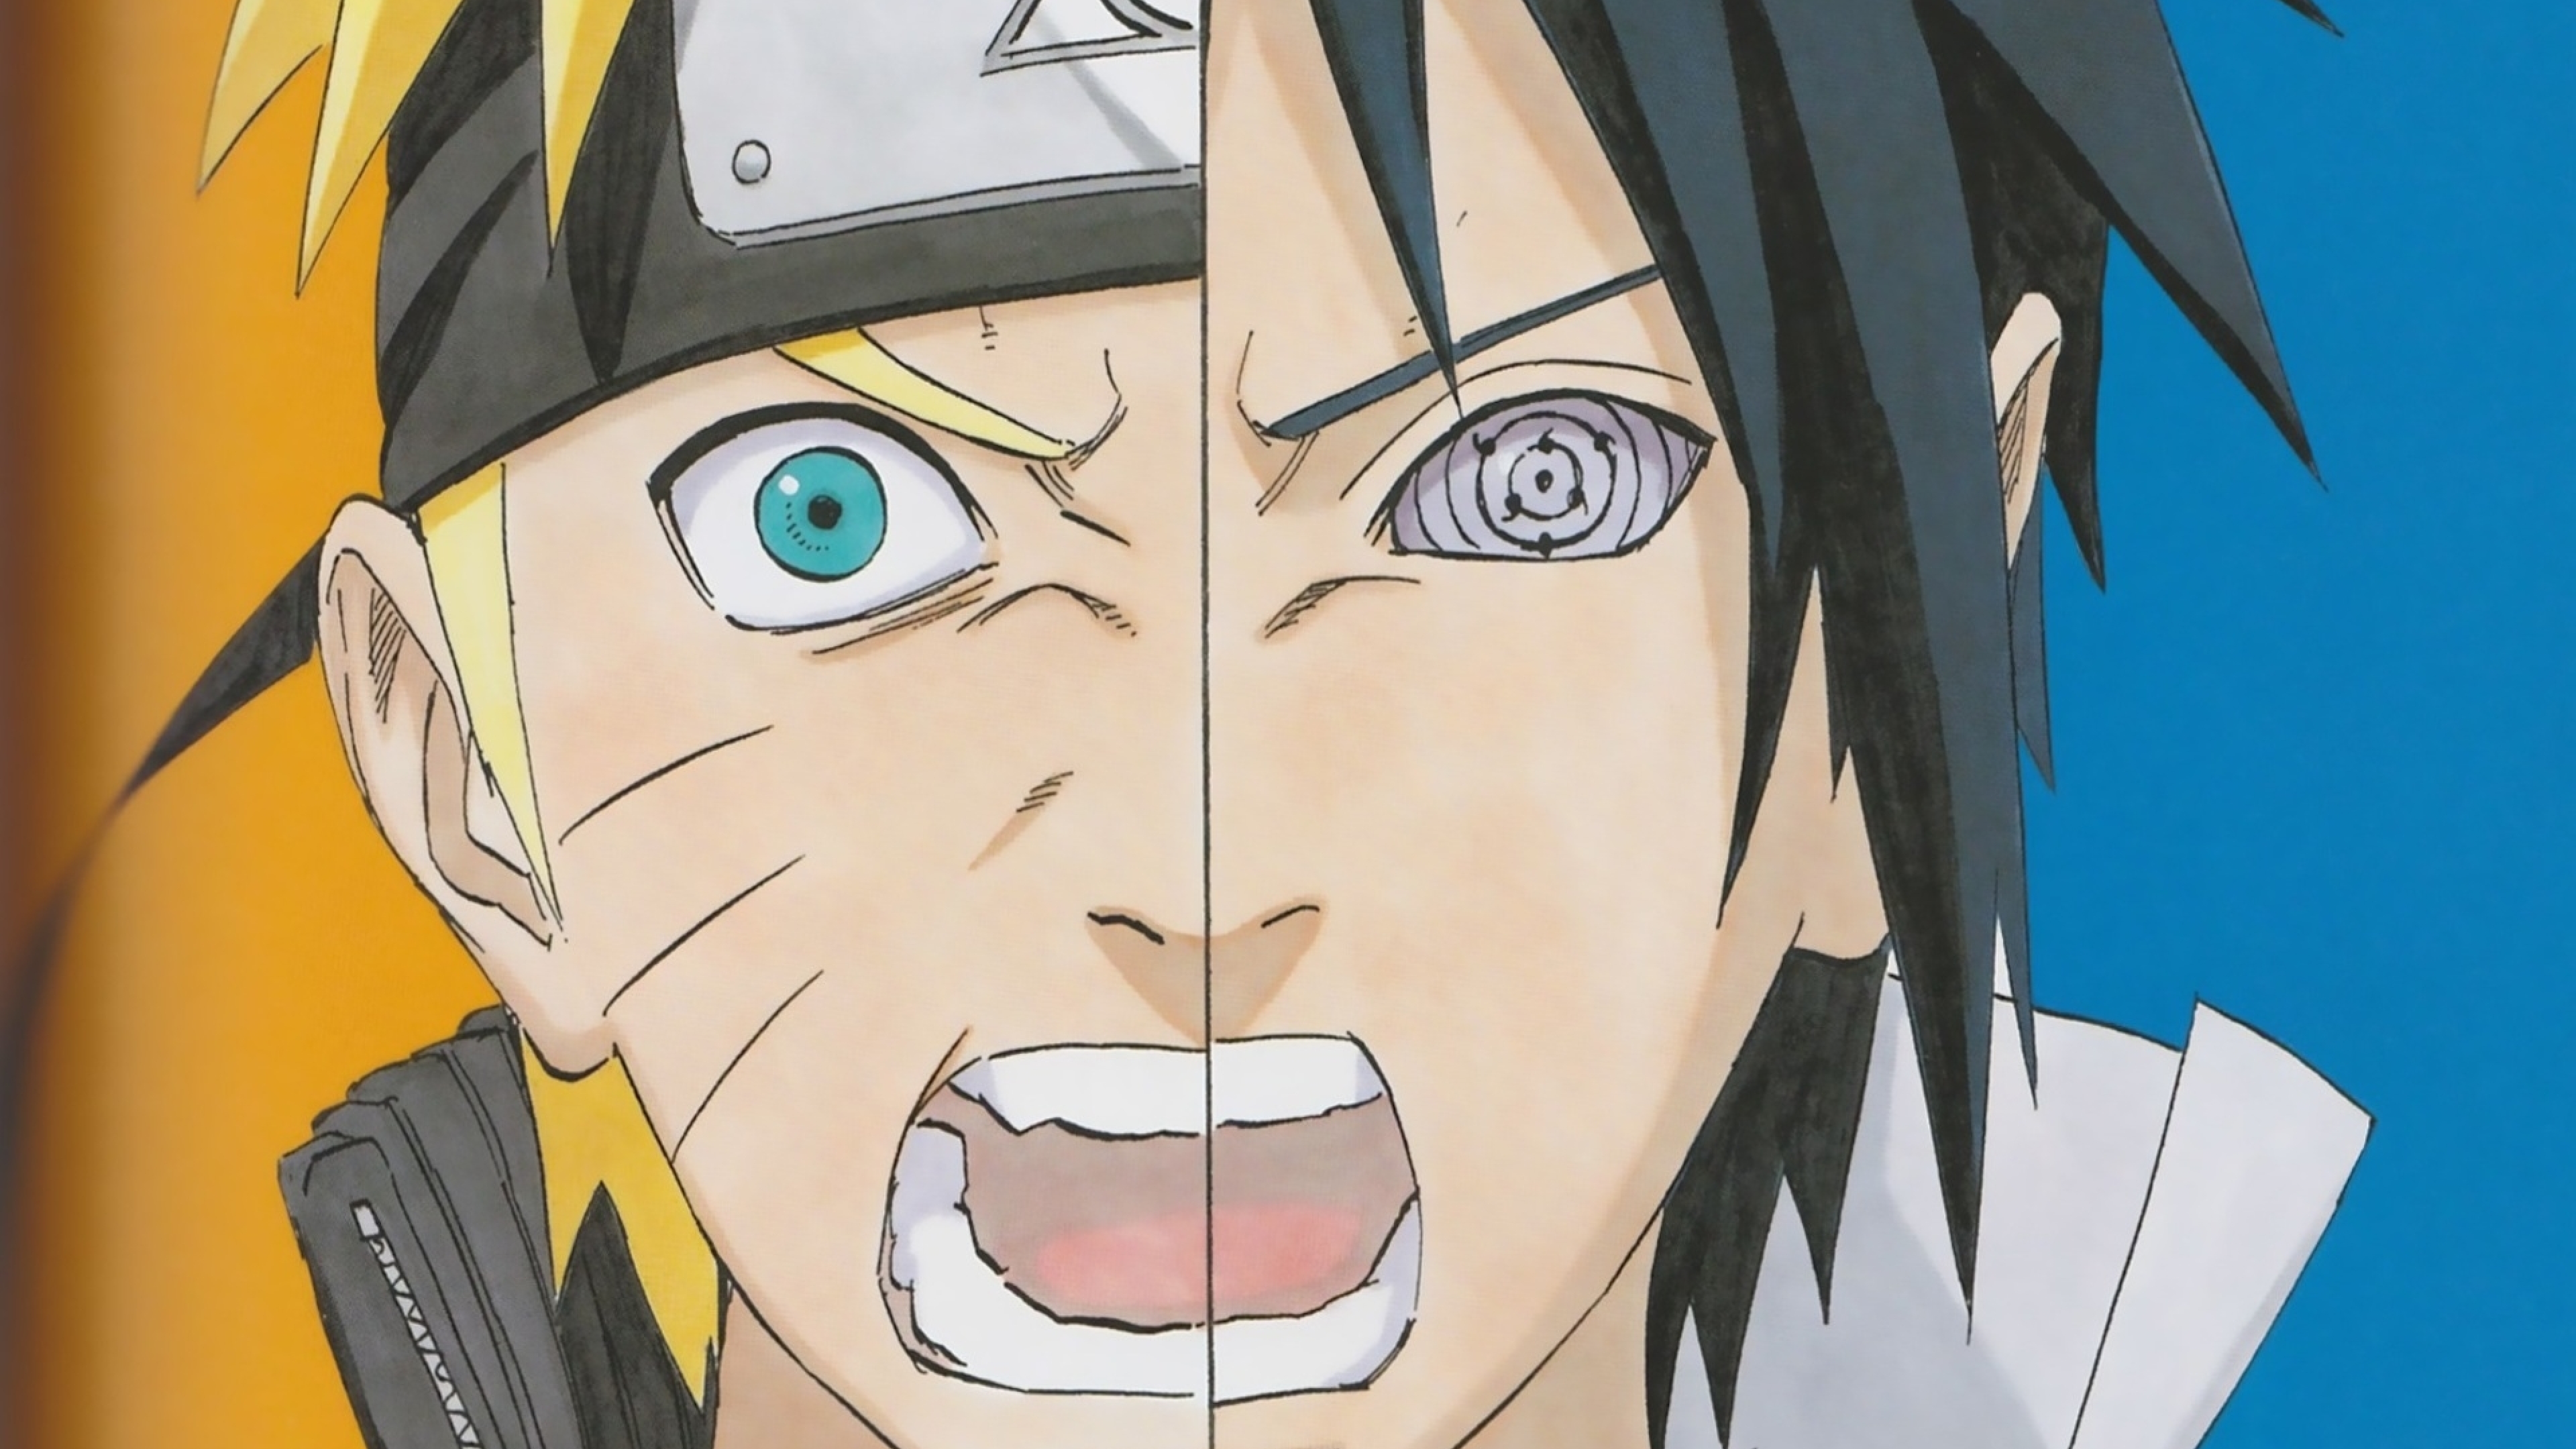 3840x2160 Sasuke Uchiha And Naruto Uzumaki 4k Wallpaper Hd Anime 4k Wallpapers Images Photos And Background